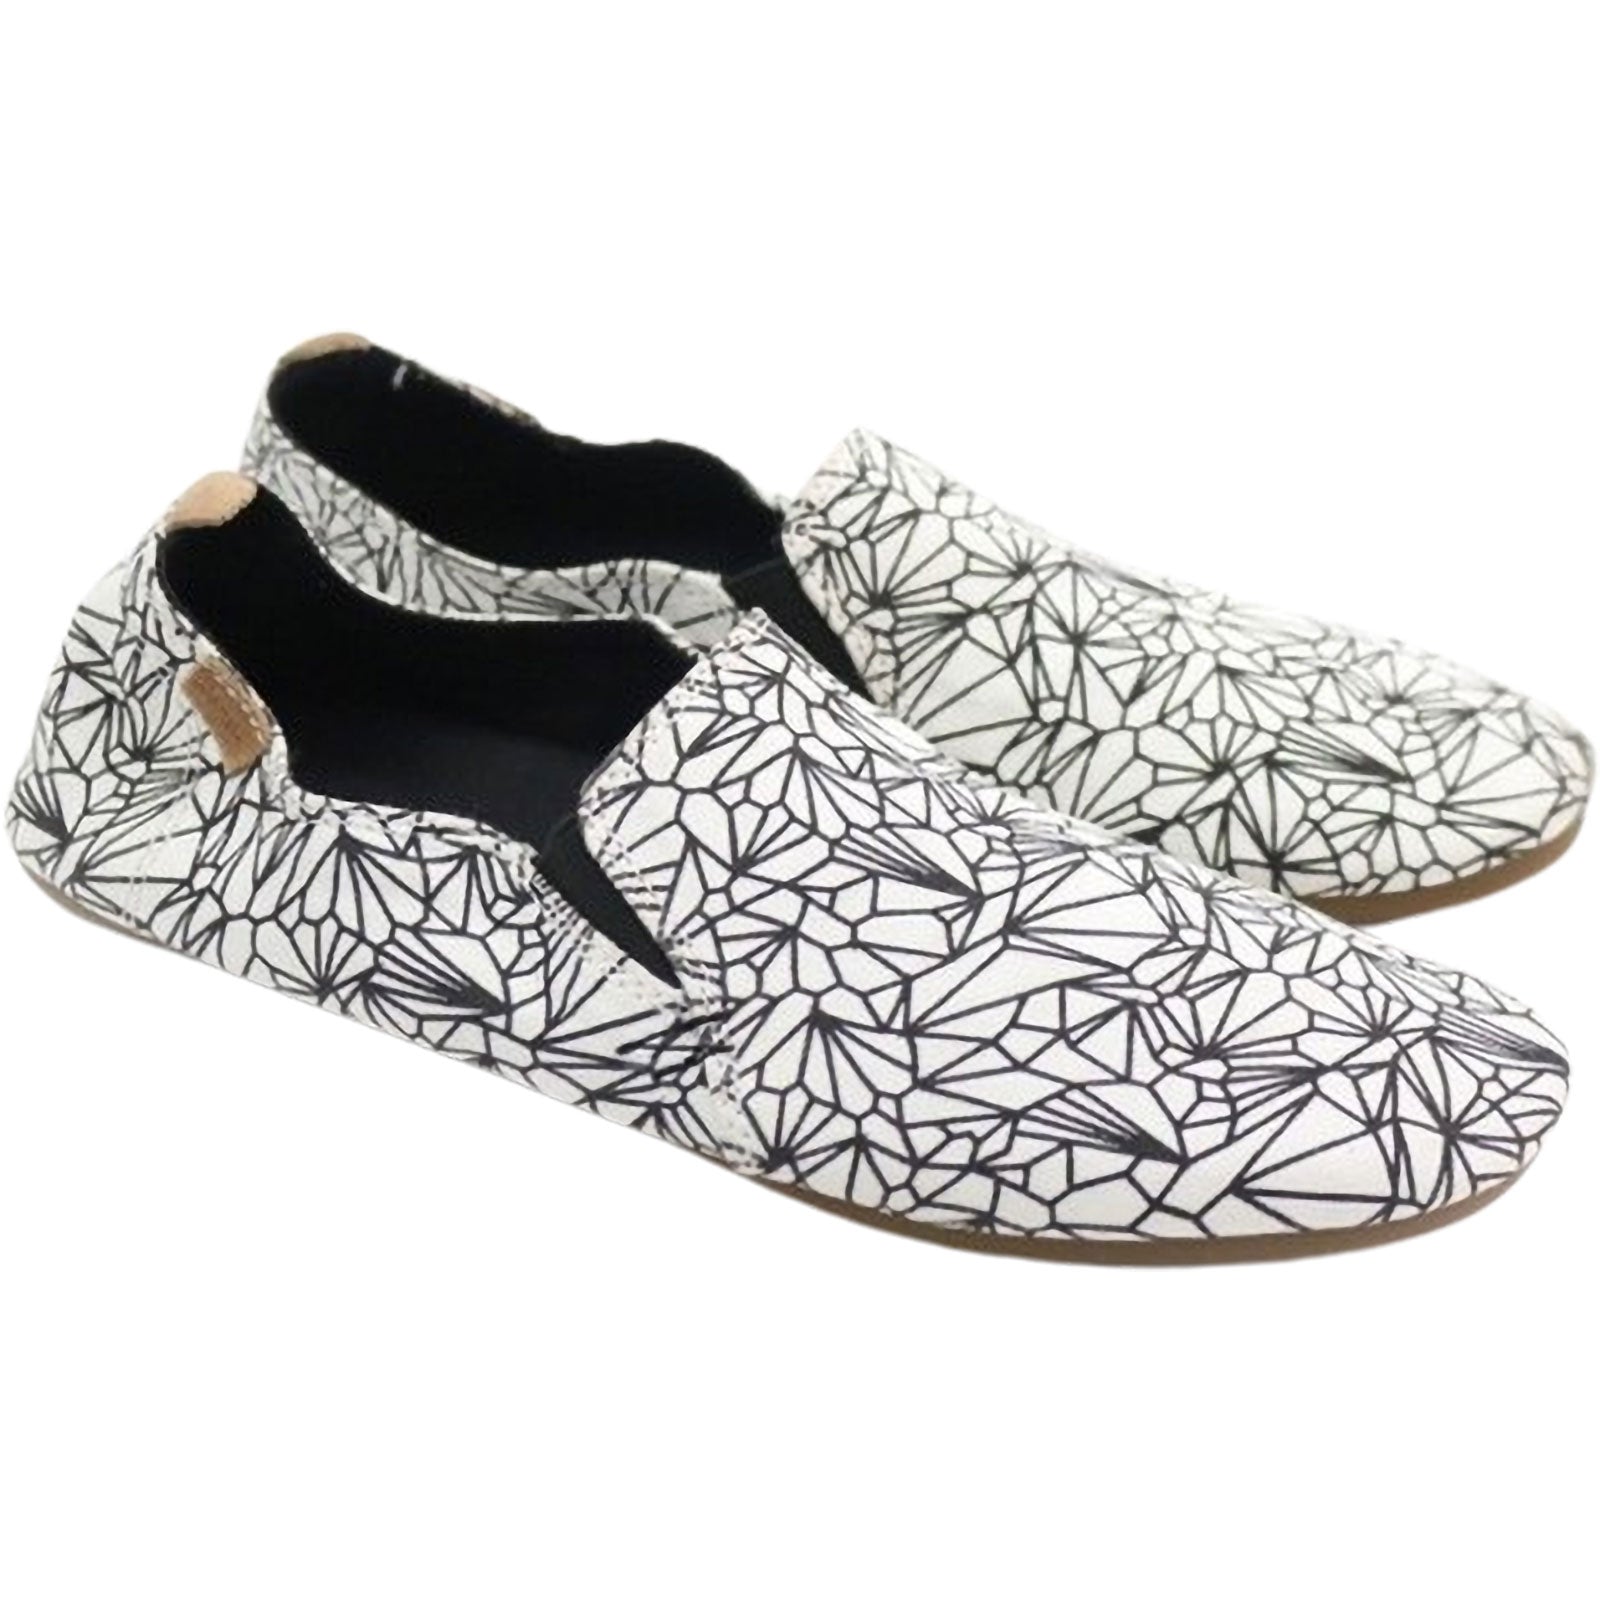 Sanuk Isabel Prints Women's Shoes Footwear - White / Black / 11